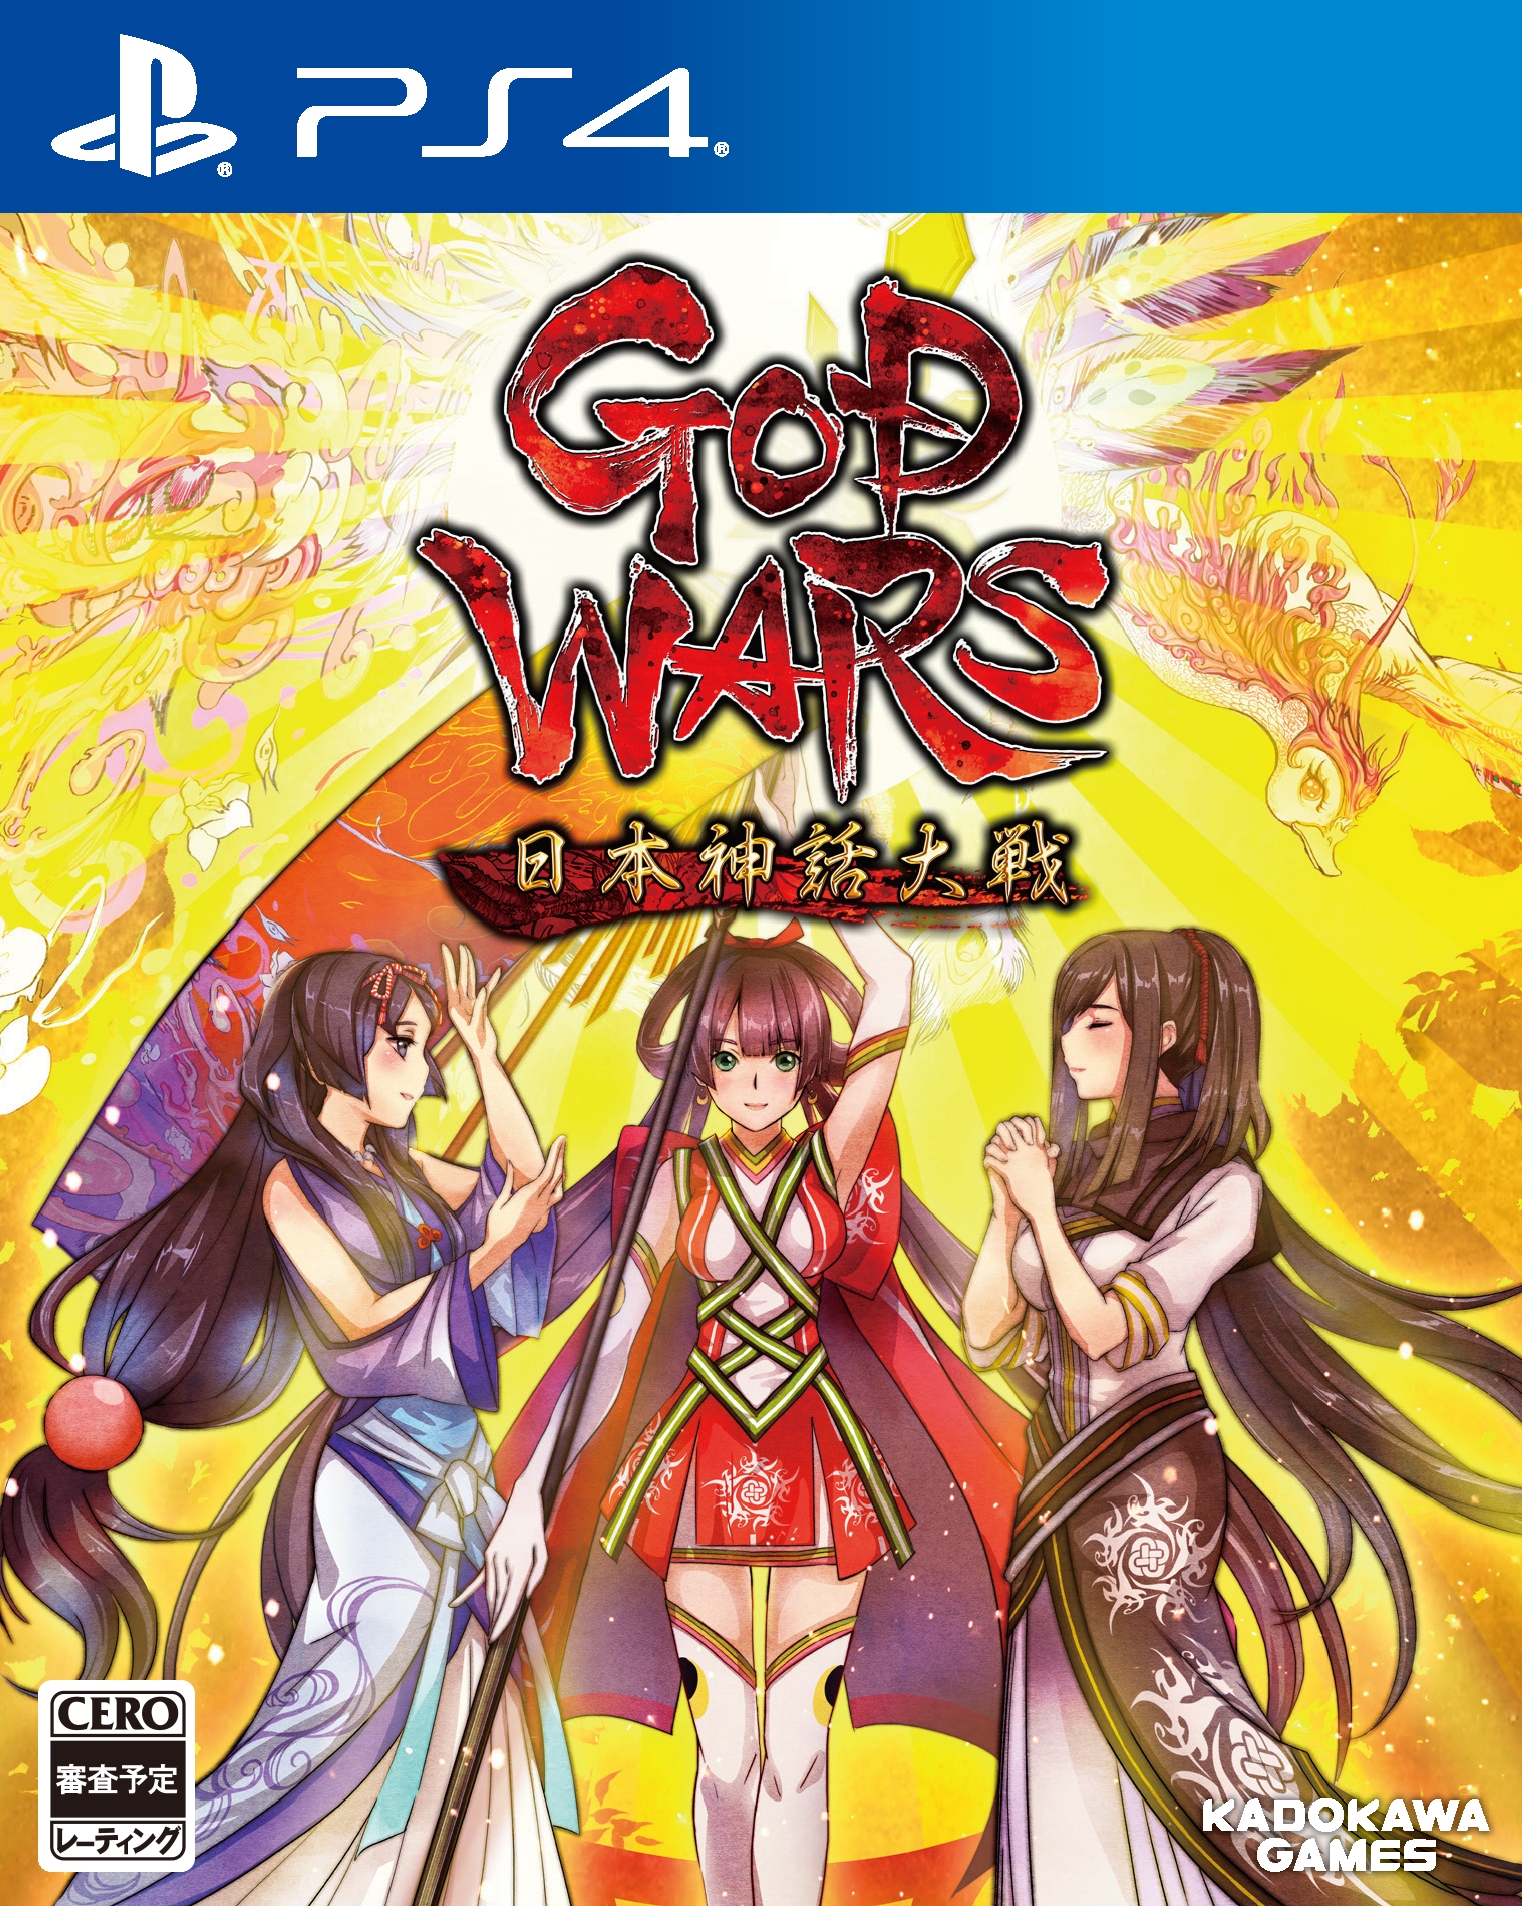 Groseramente Engañoso Medicina God Wars: The Complete Legend launches June 14 in Japan - Gematsu